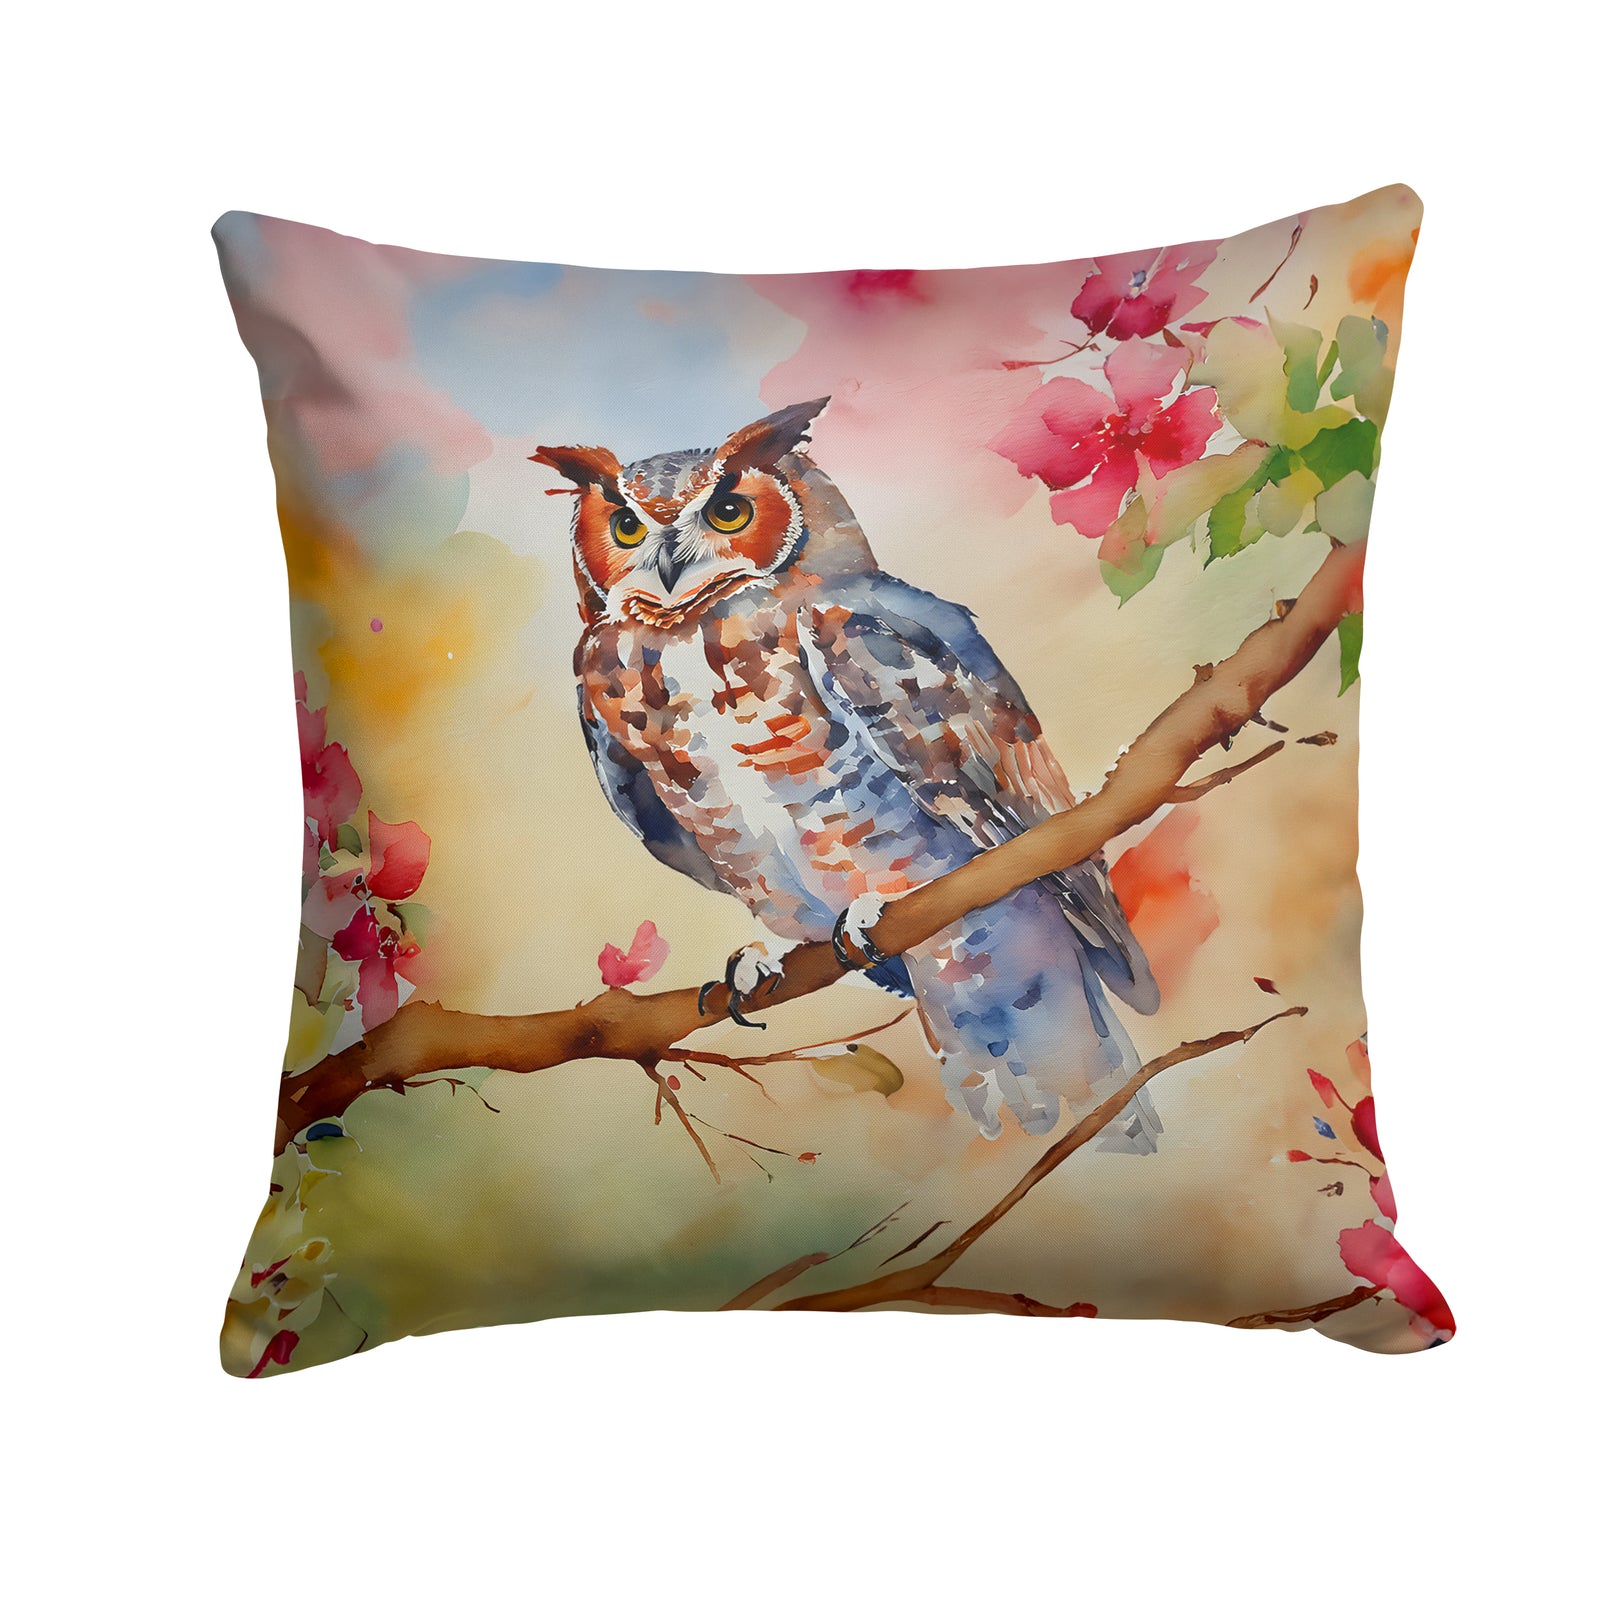 Buy this Eastern Screech Owl Throw Pillow